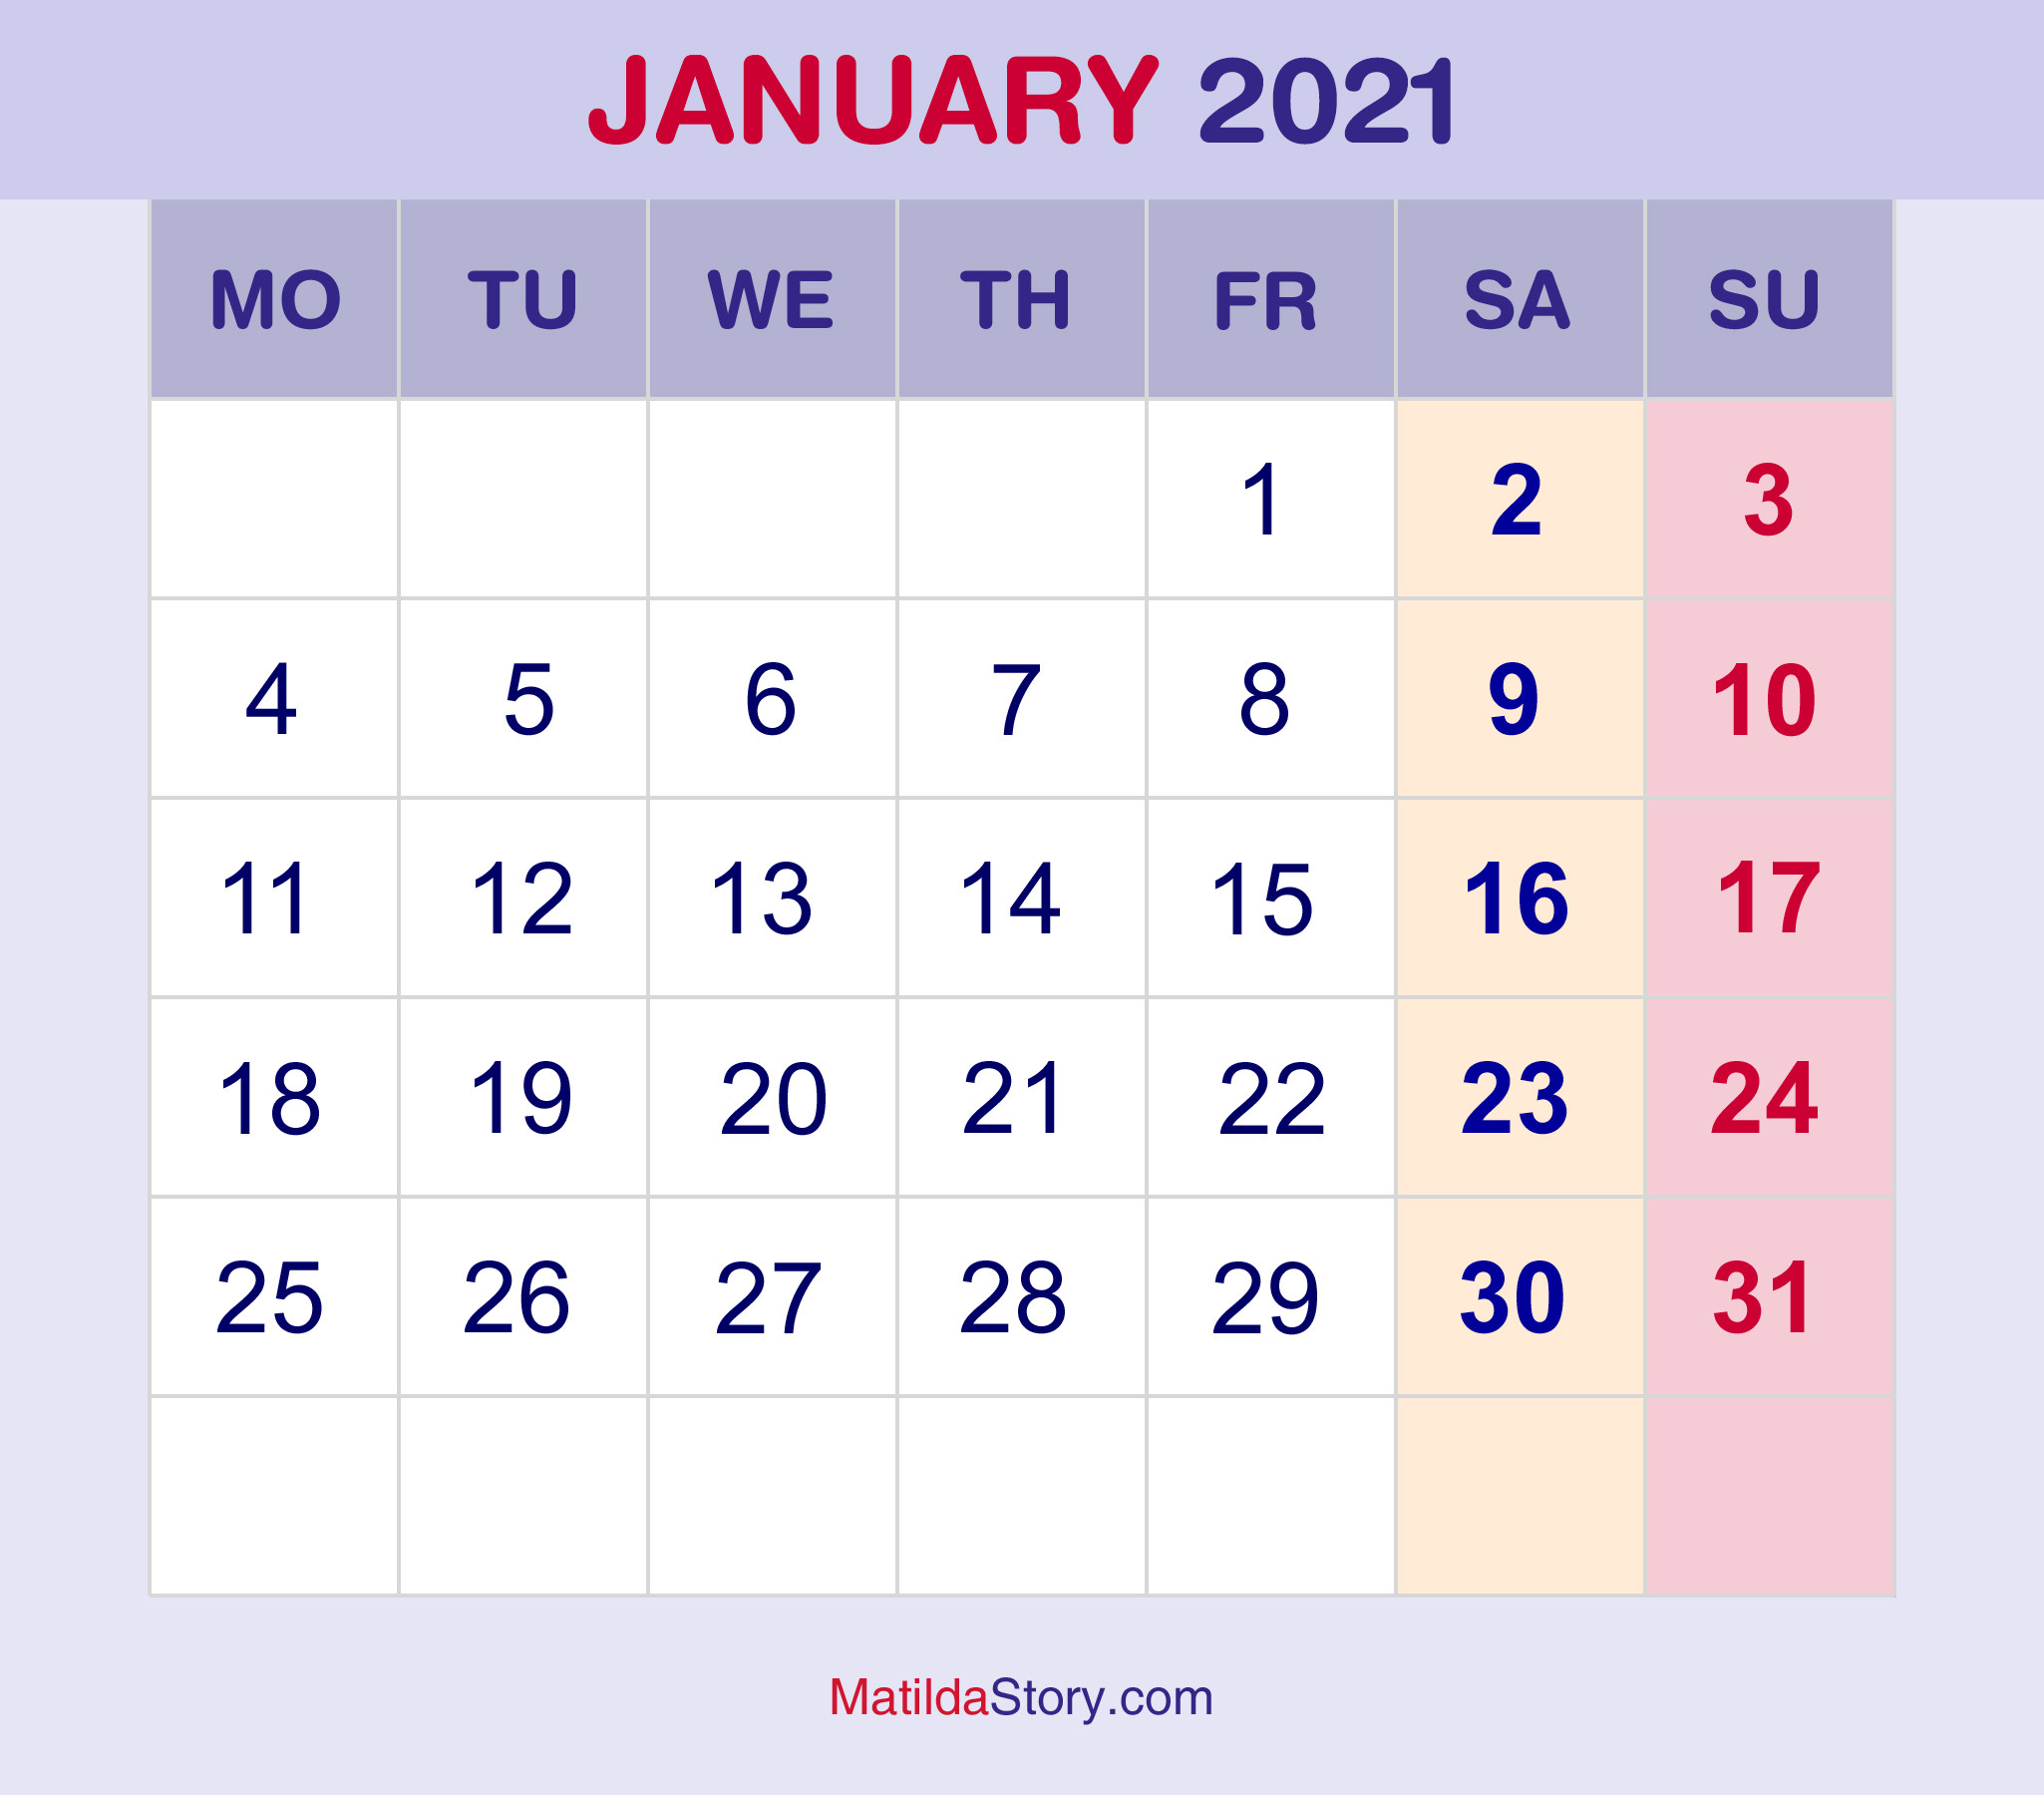 January 2021 Calendar Free Download : January 2021 Free-January 2021 Calendar Printable Free Monthly